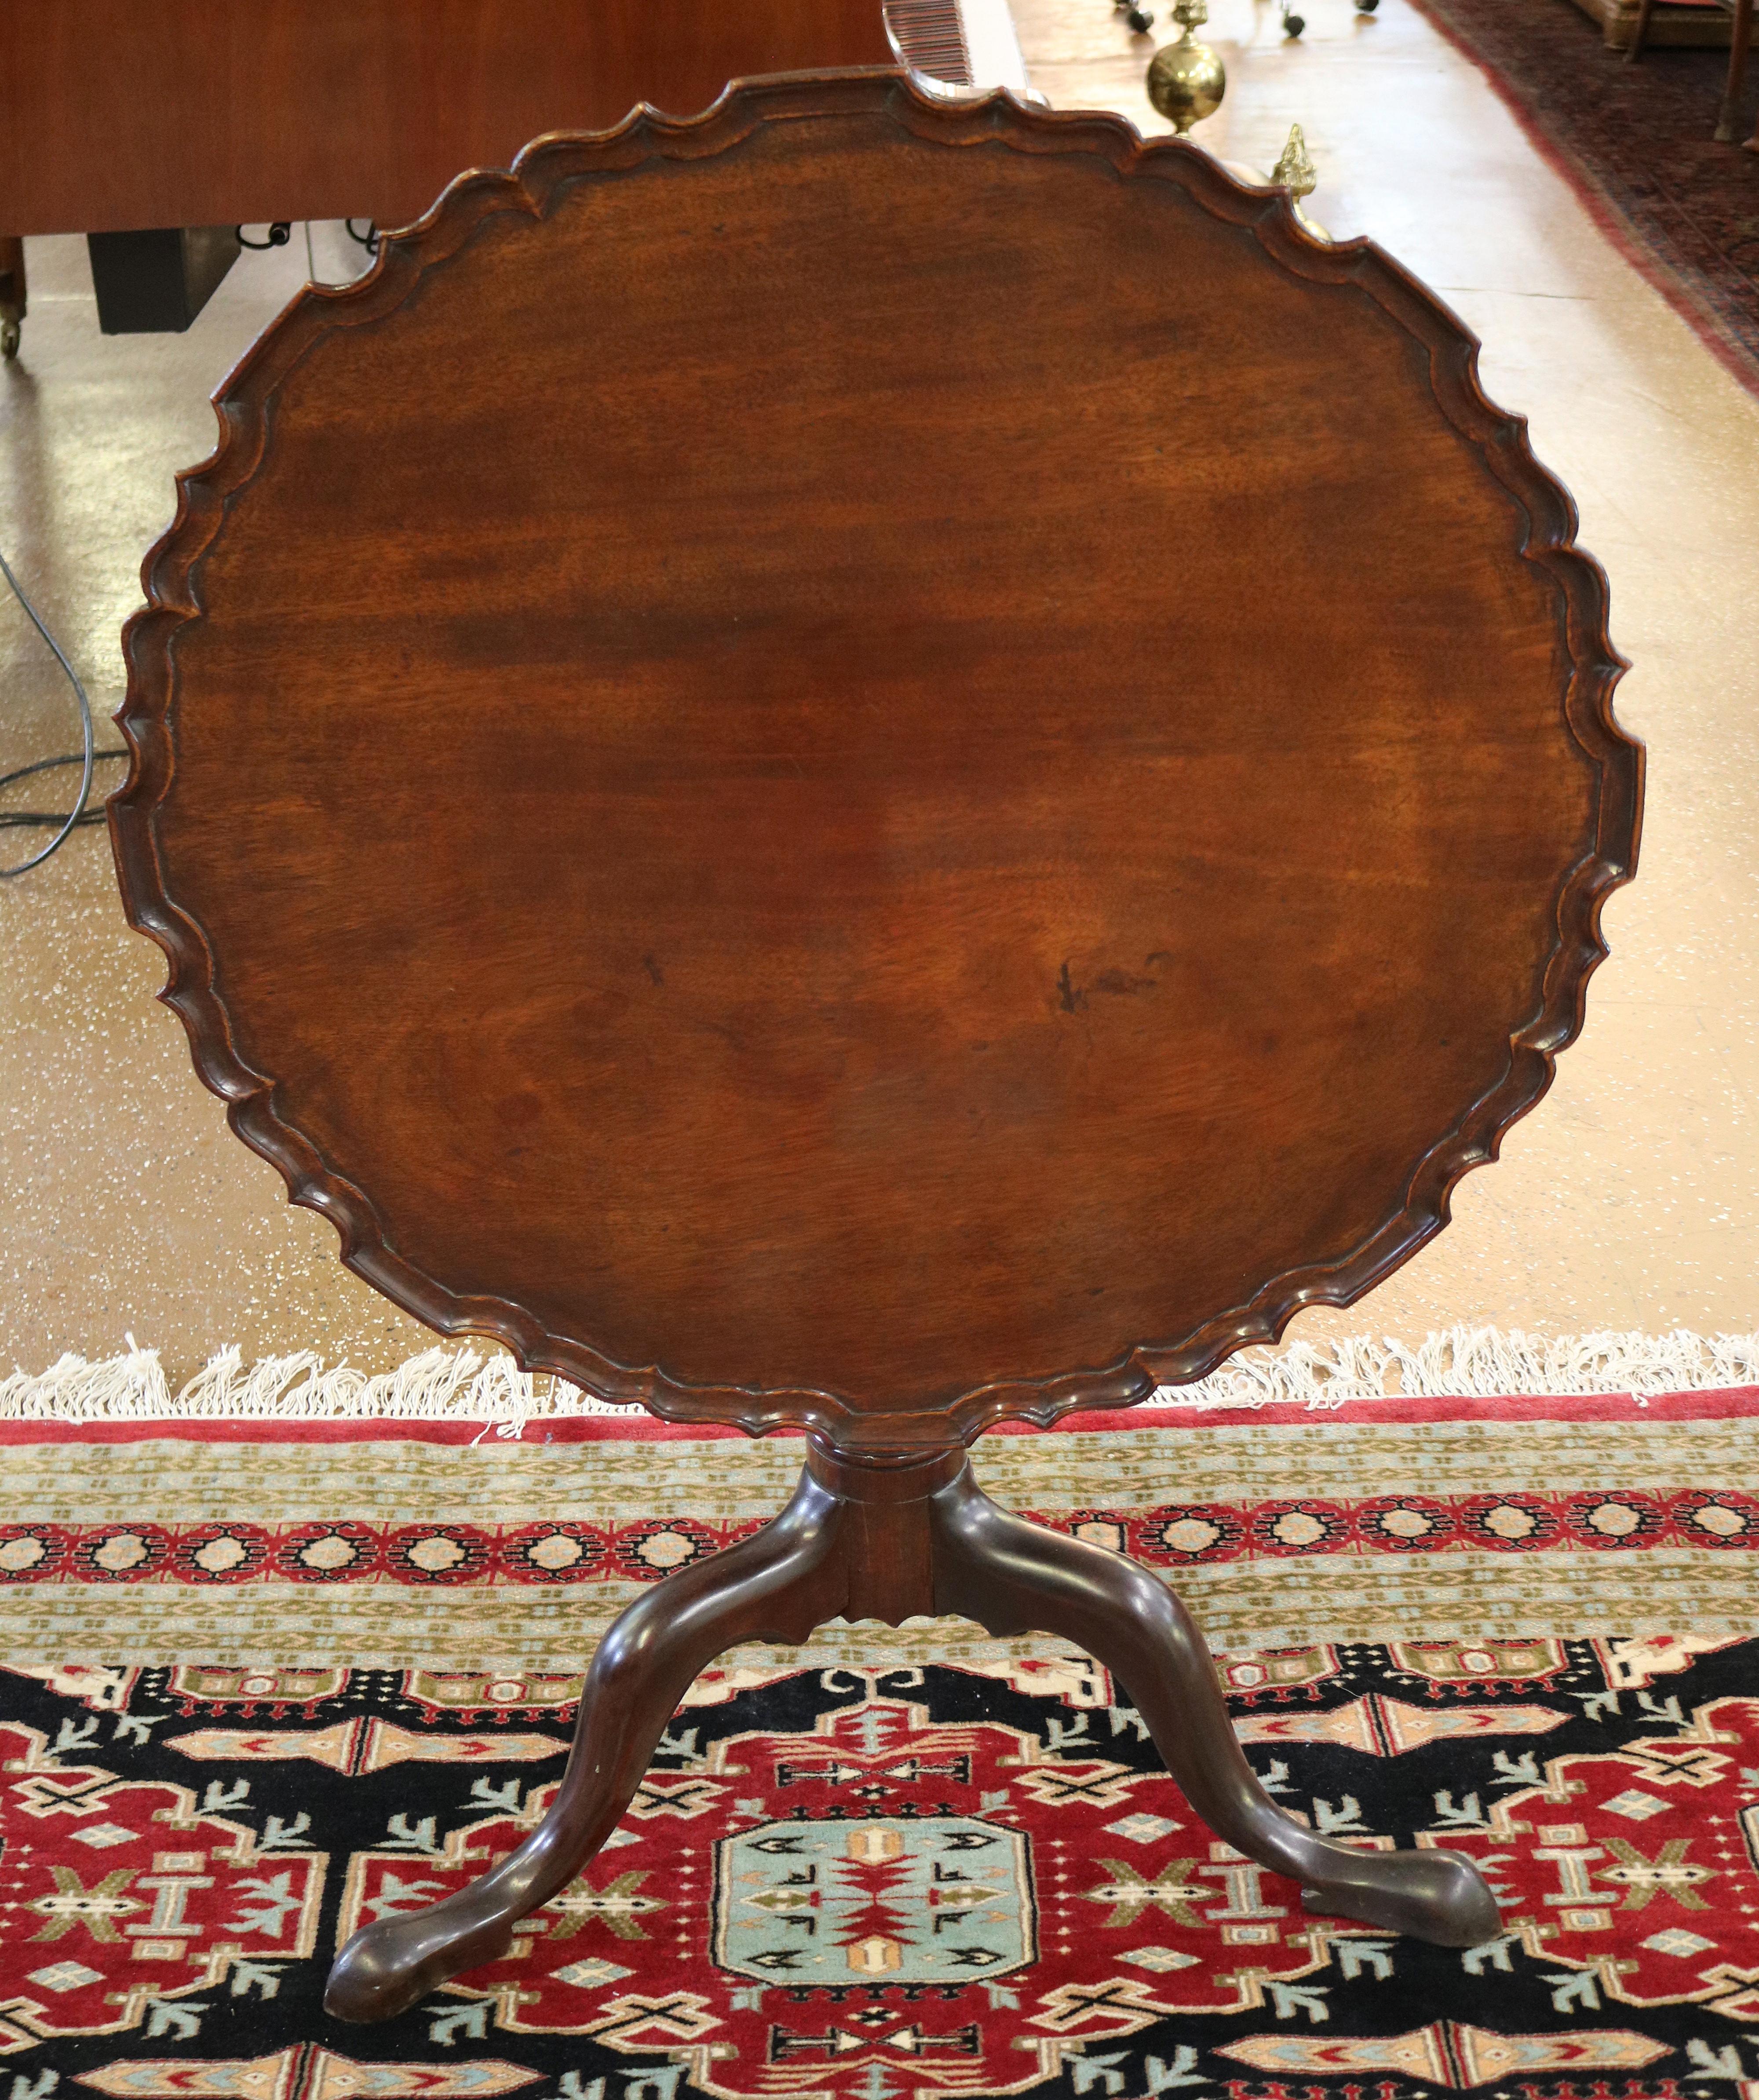 ​Gorgeous Mahogany 18th Century Queen Anne Pie Crust Tilt Top Table Circa 1740's

Dimensions : 26